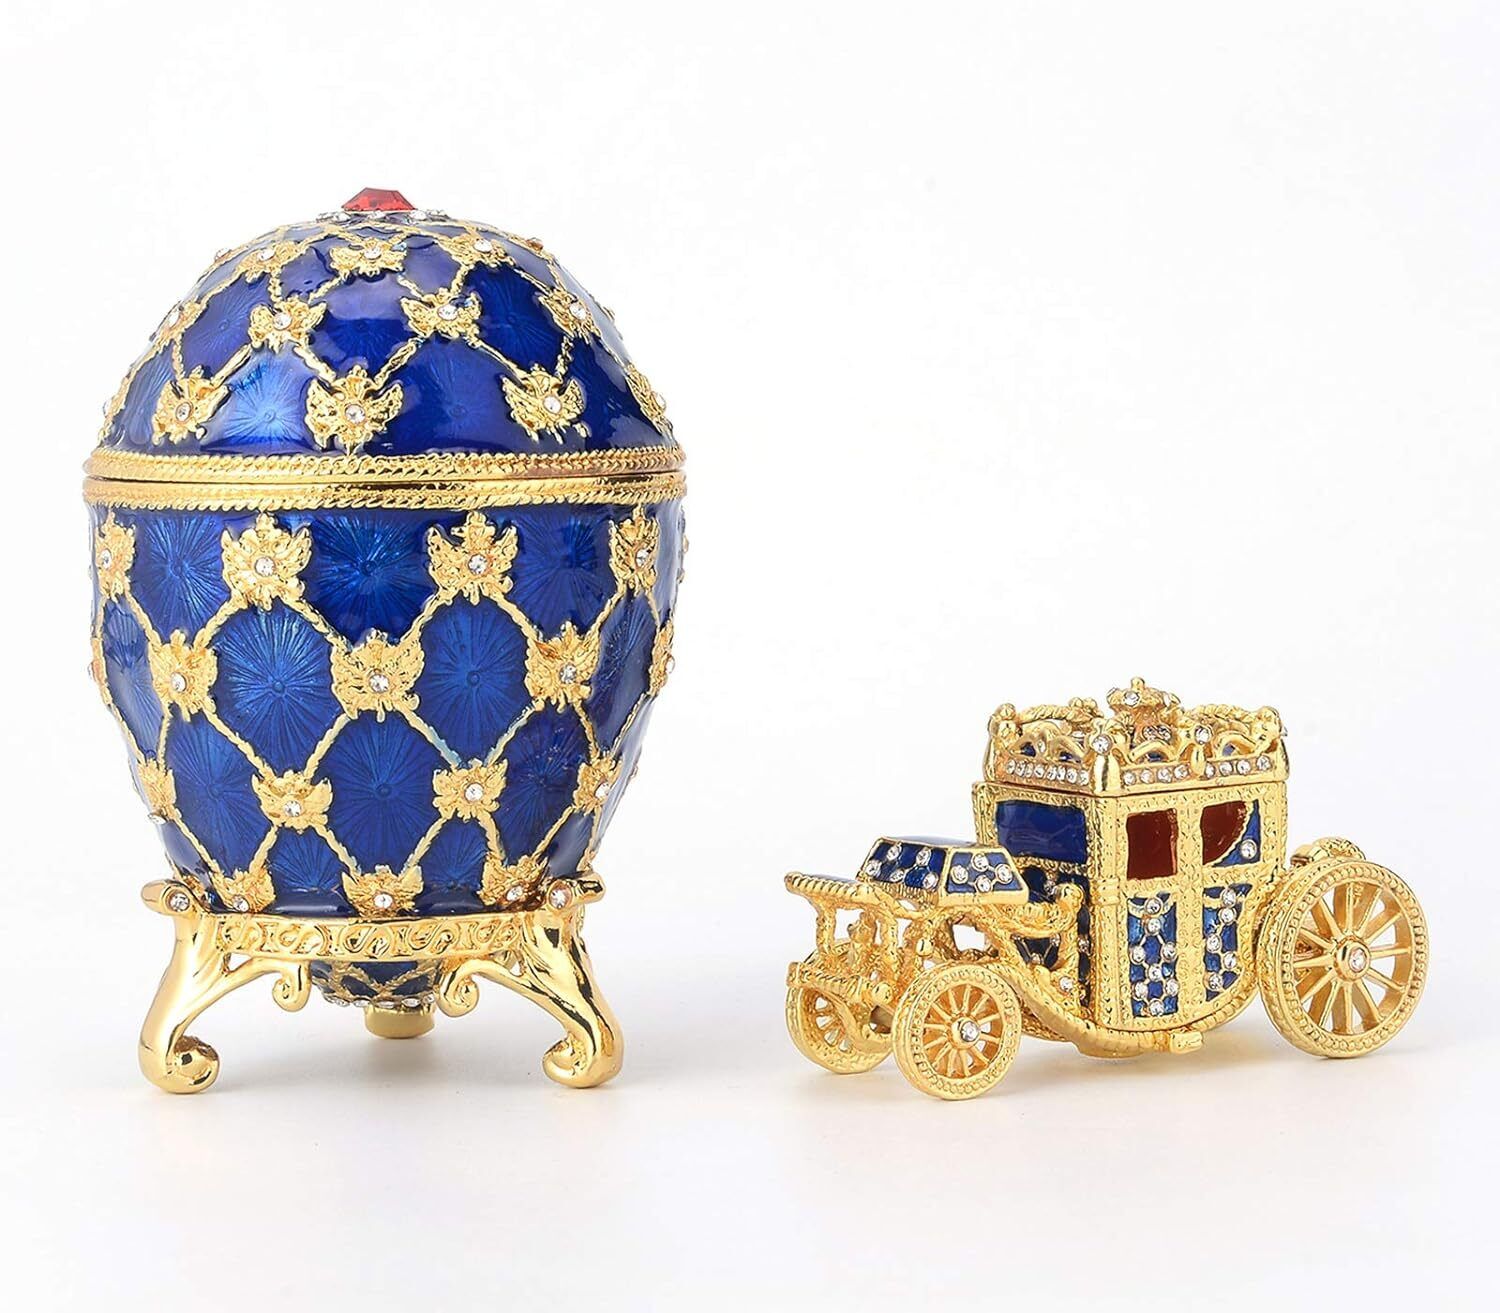 QIFU Vintage Faberge Egg Style Jewelry Trinket Box with Mini Royal Blue